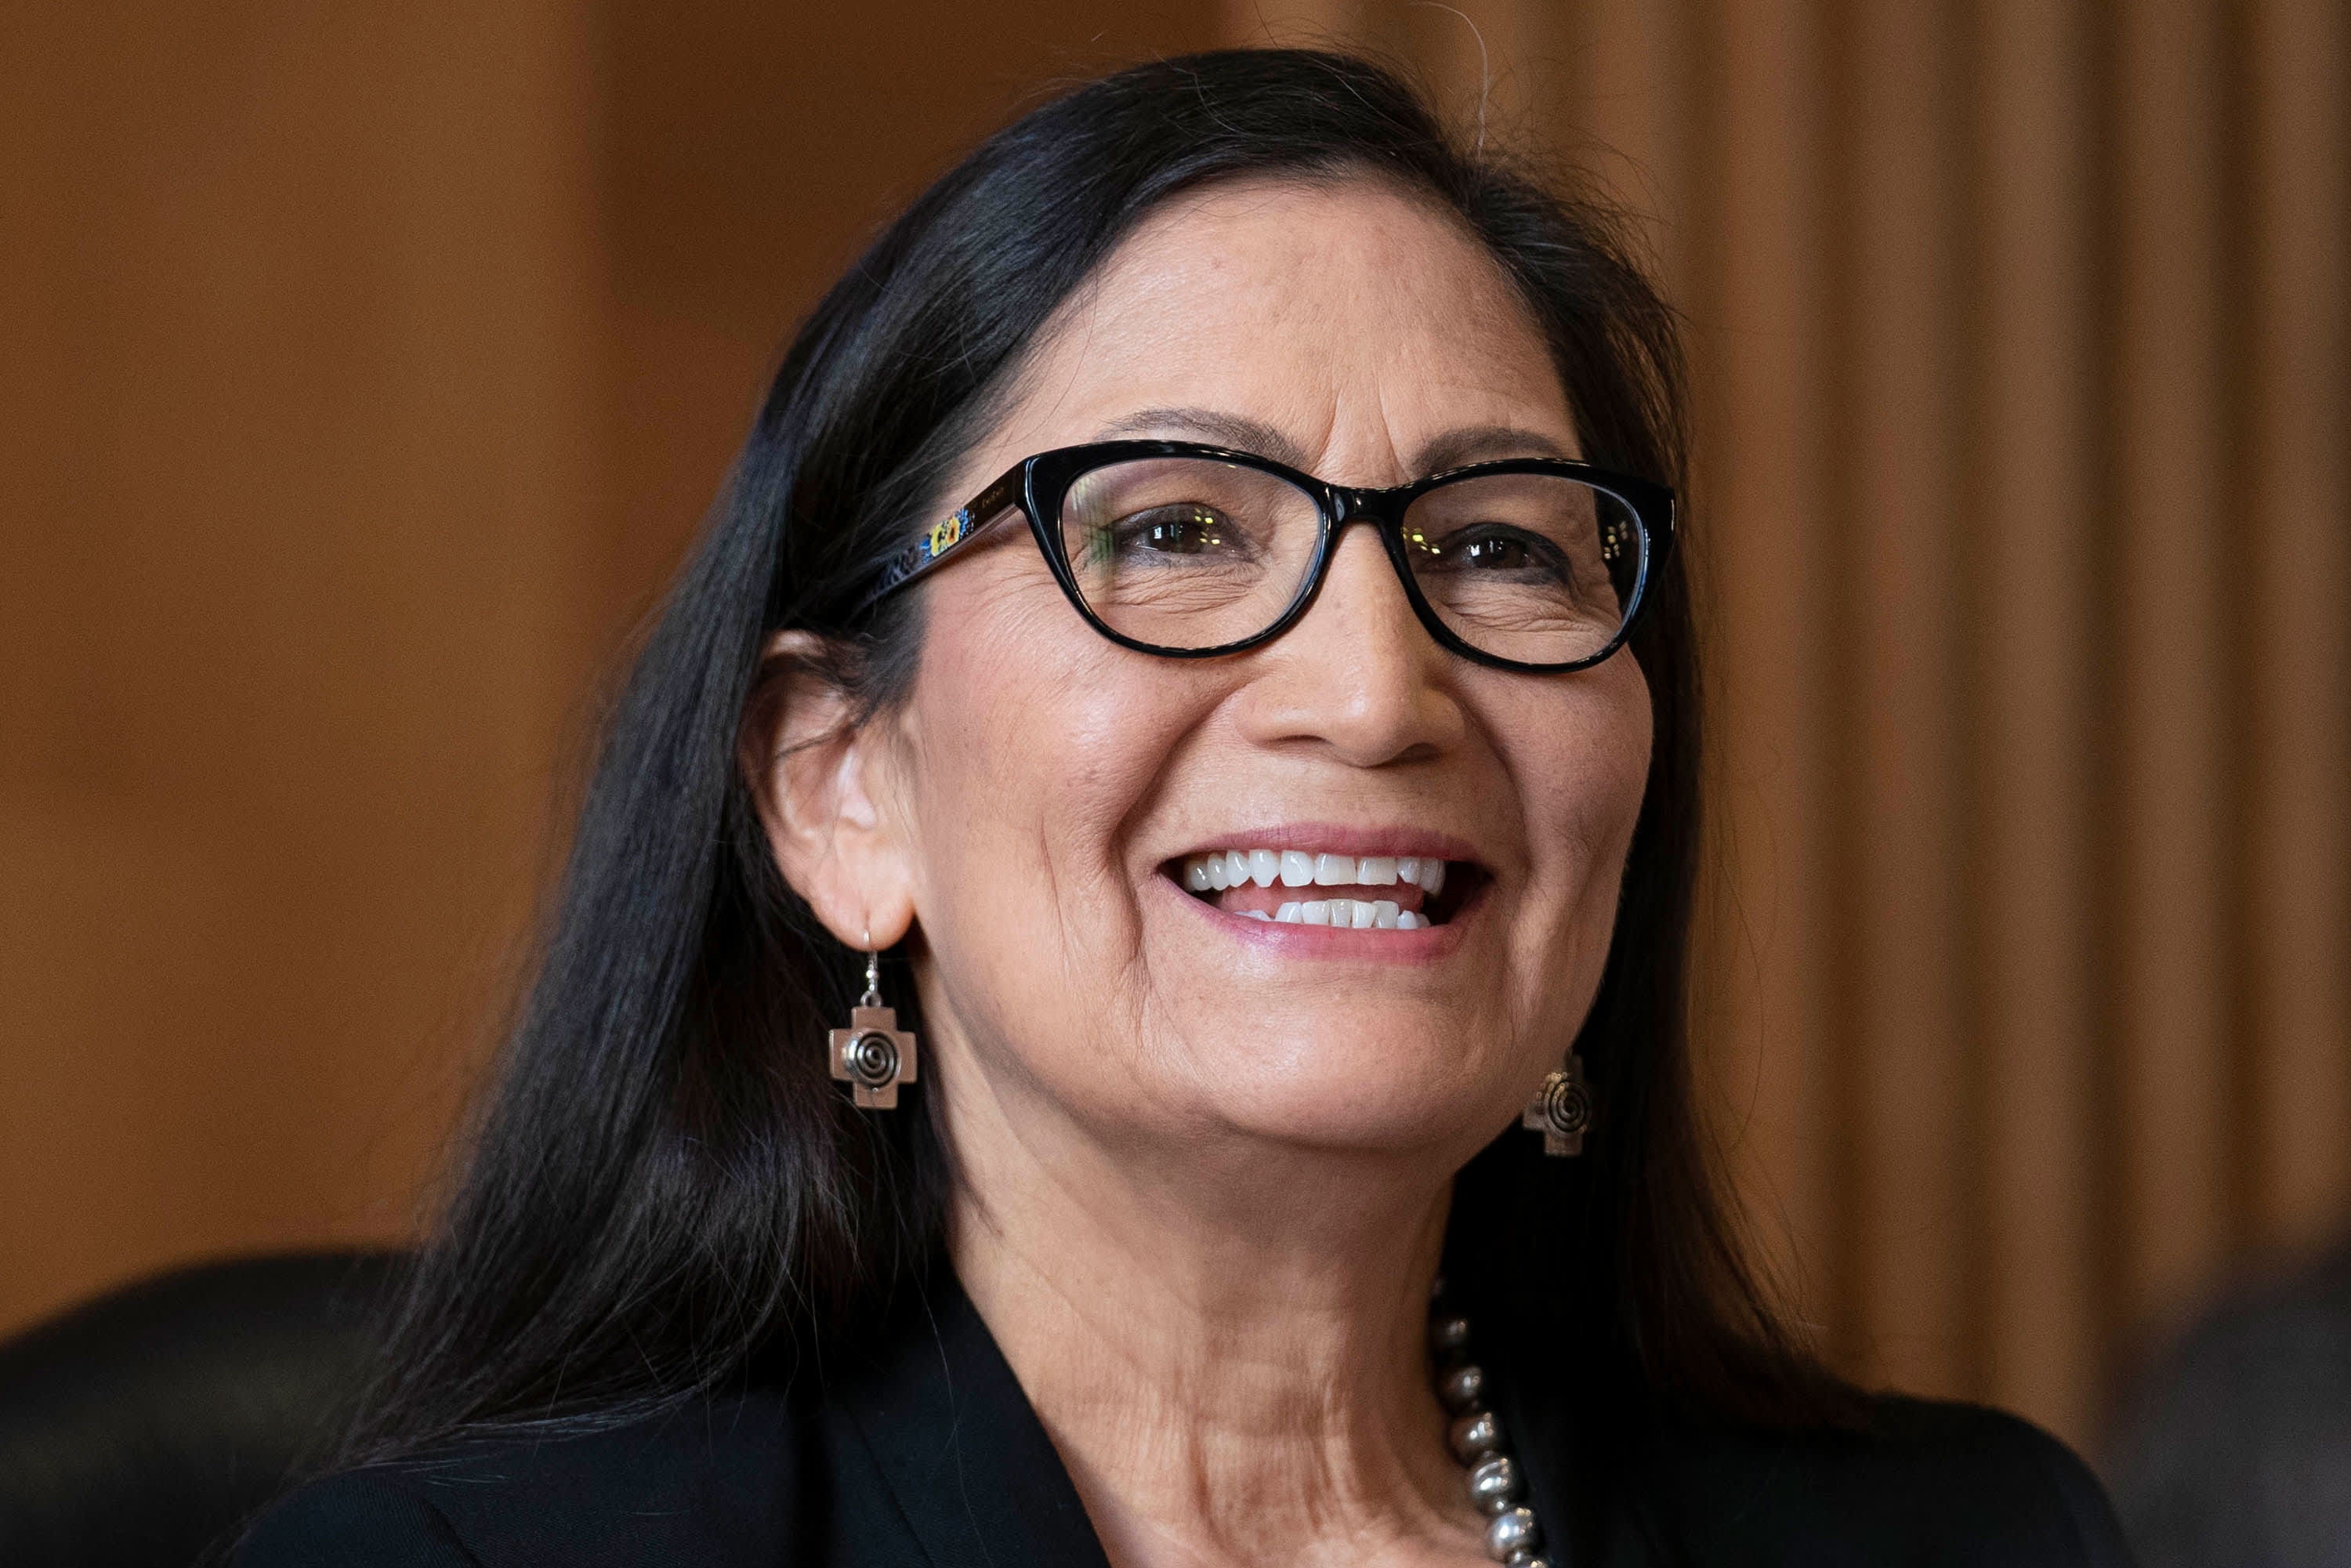 Deb Haaland confirmed as first Native American Cabinet secretary